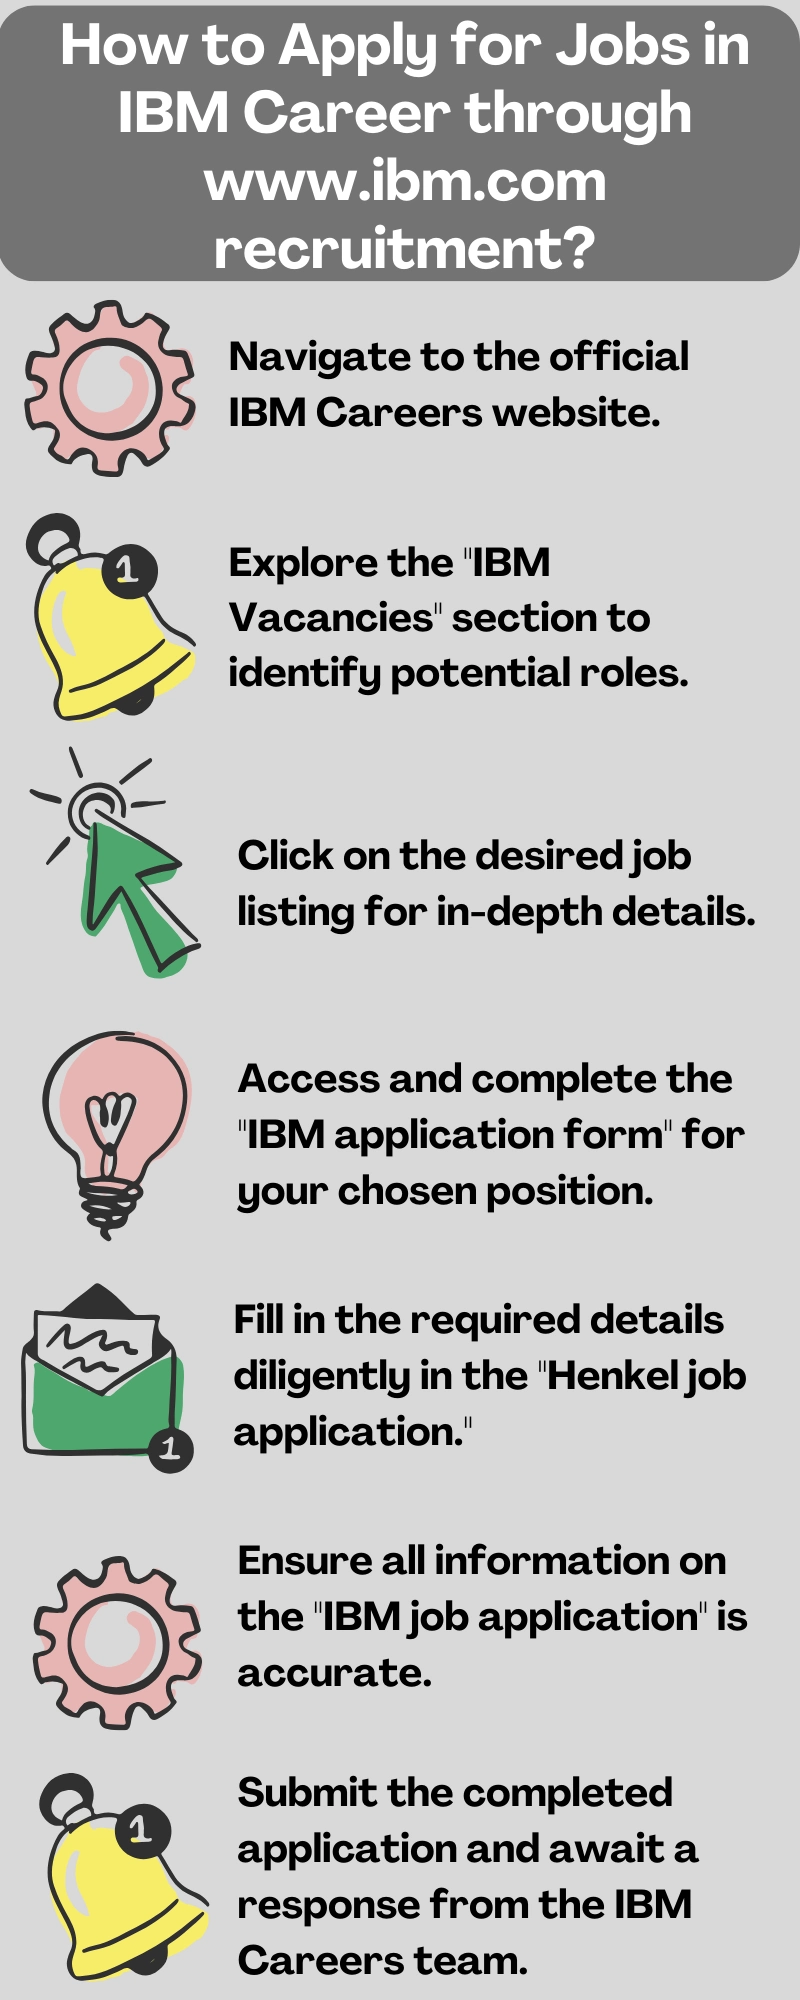 How to Apply for Jobs in IBM Career through www.ibm.com recruitment_